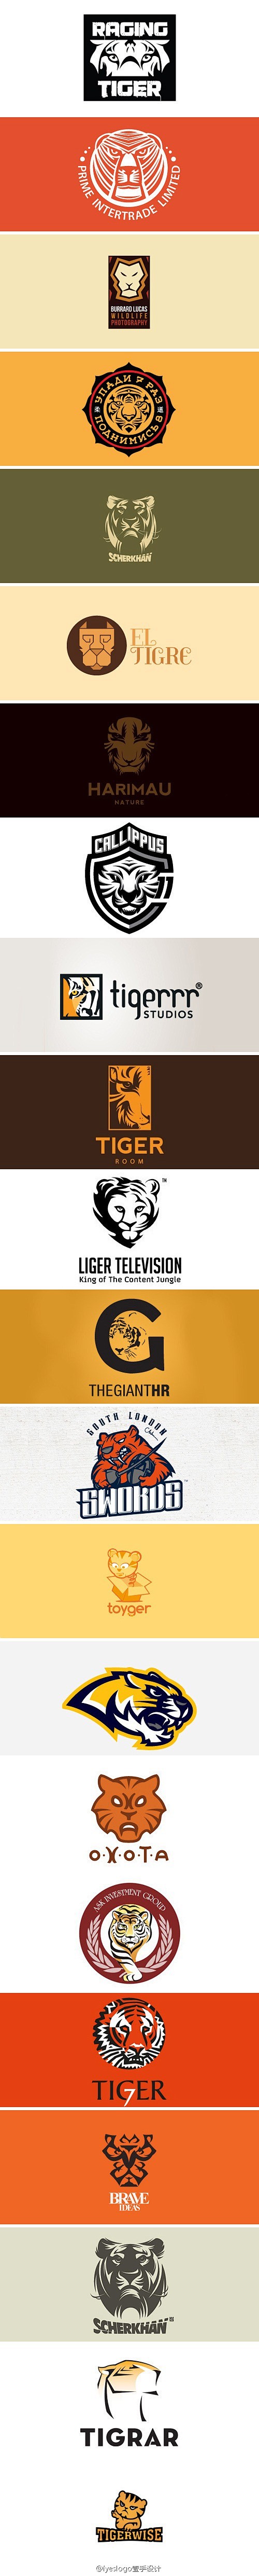 老虎logo